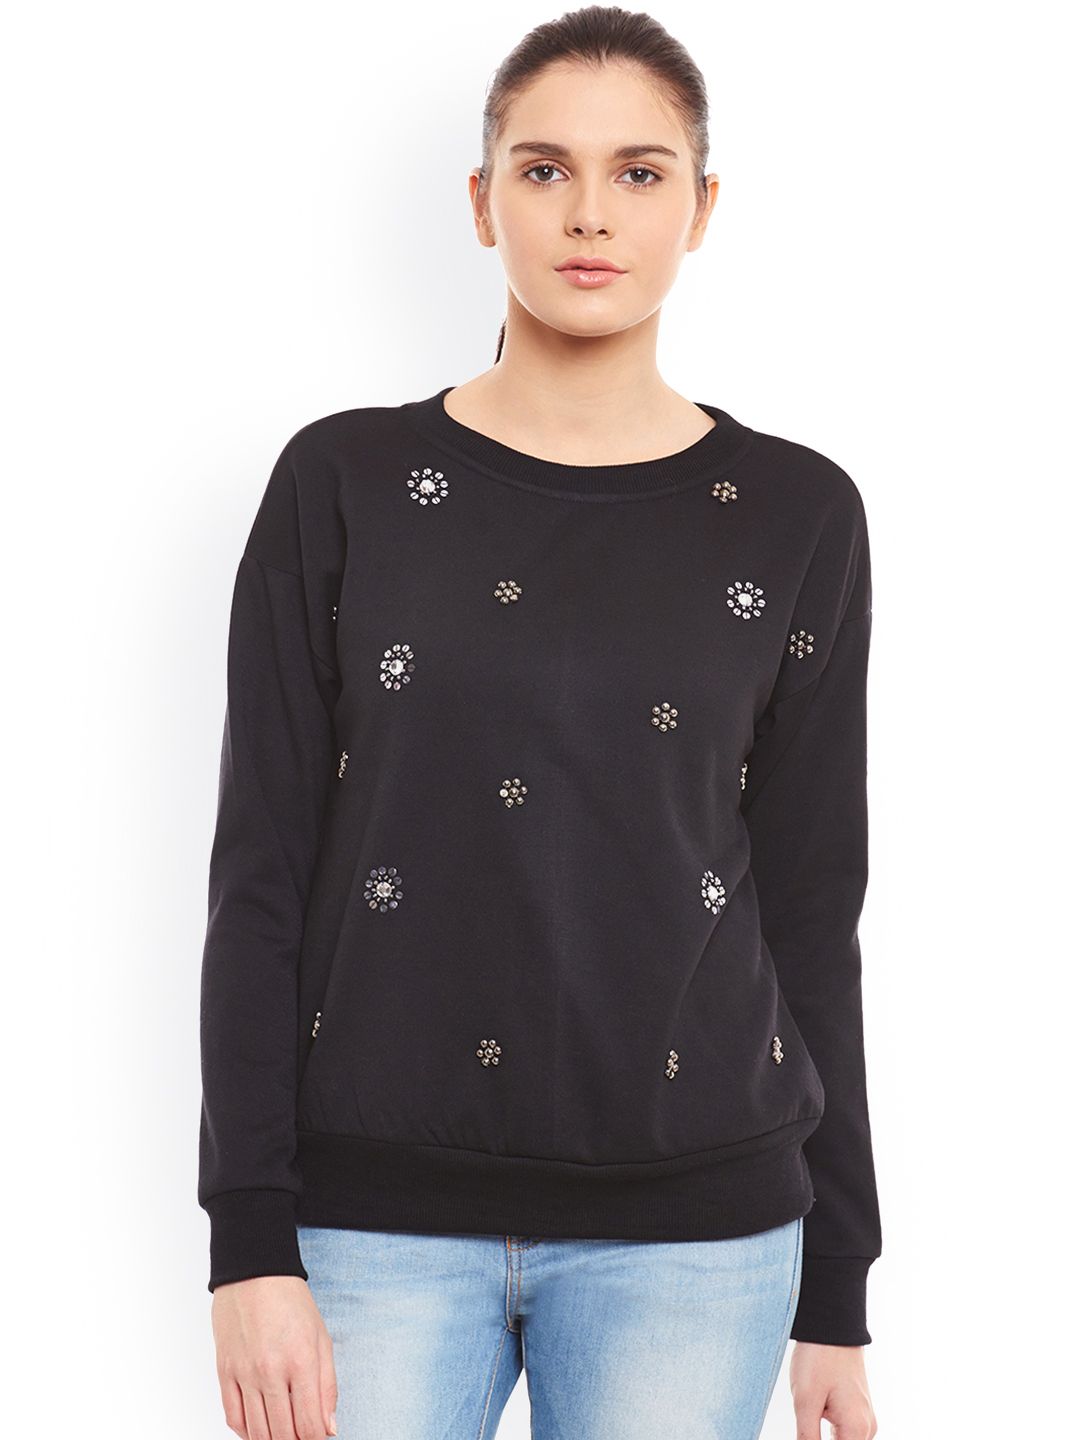 Belle Fille Black Embellished Sweatshirt Price in India